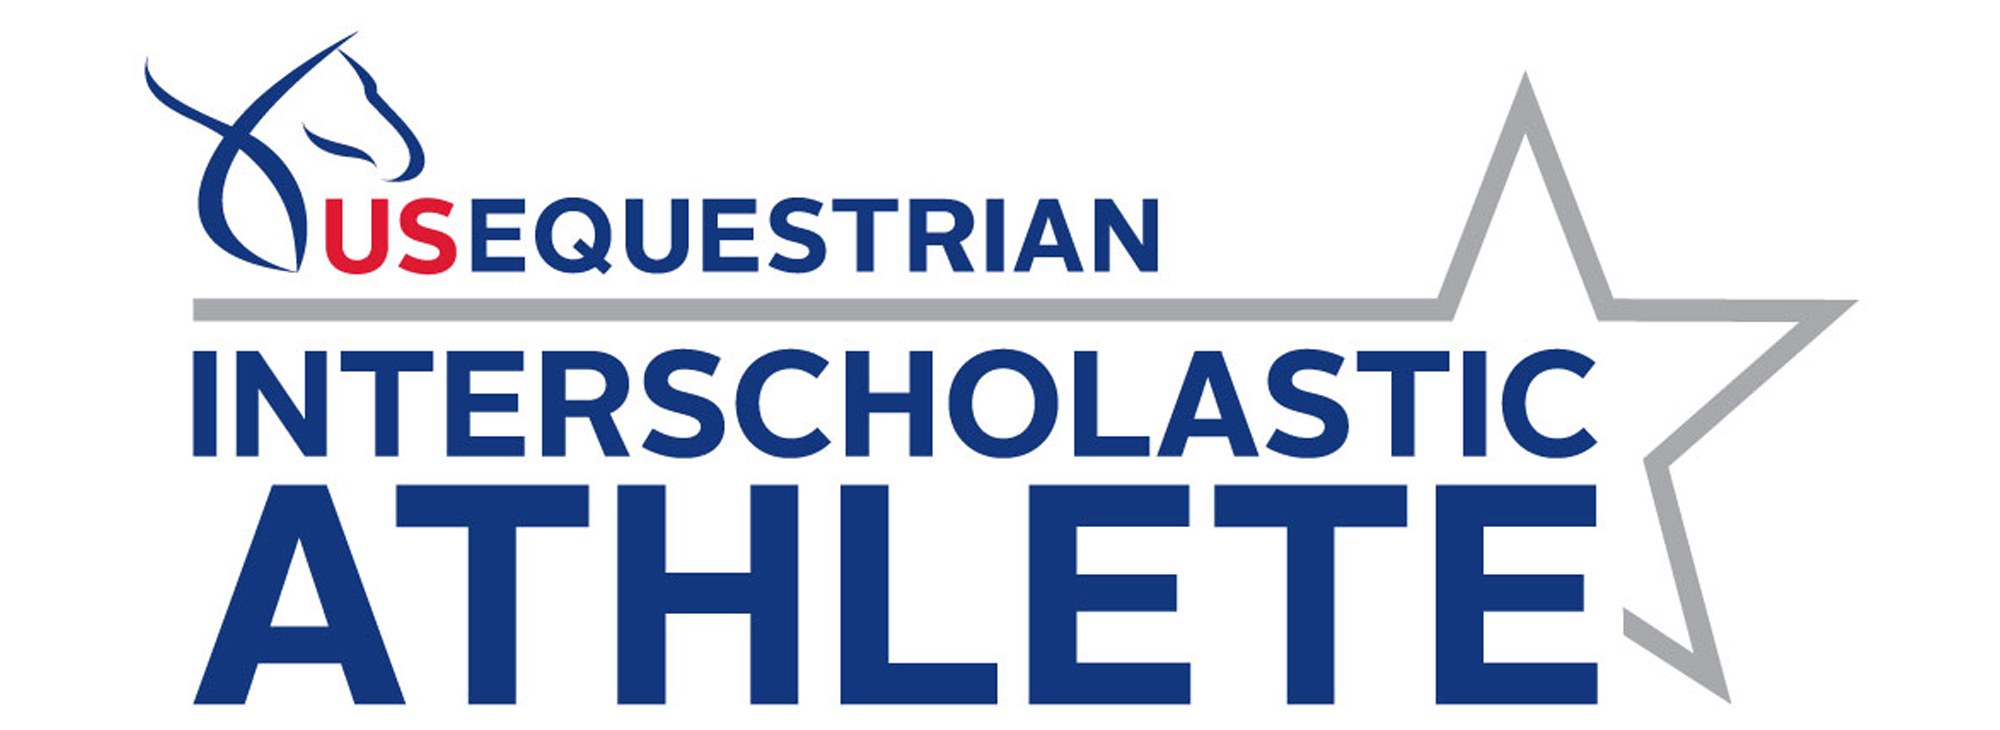 USEF Interscholastic Athlete Logo